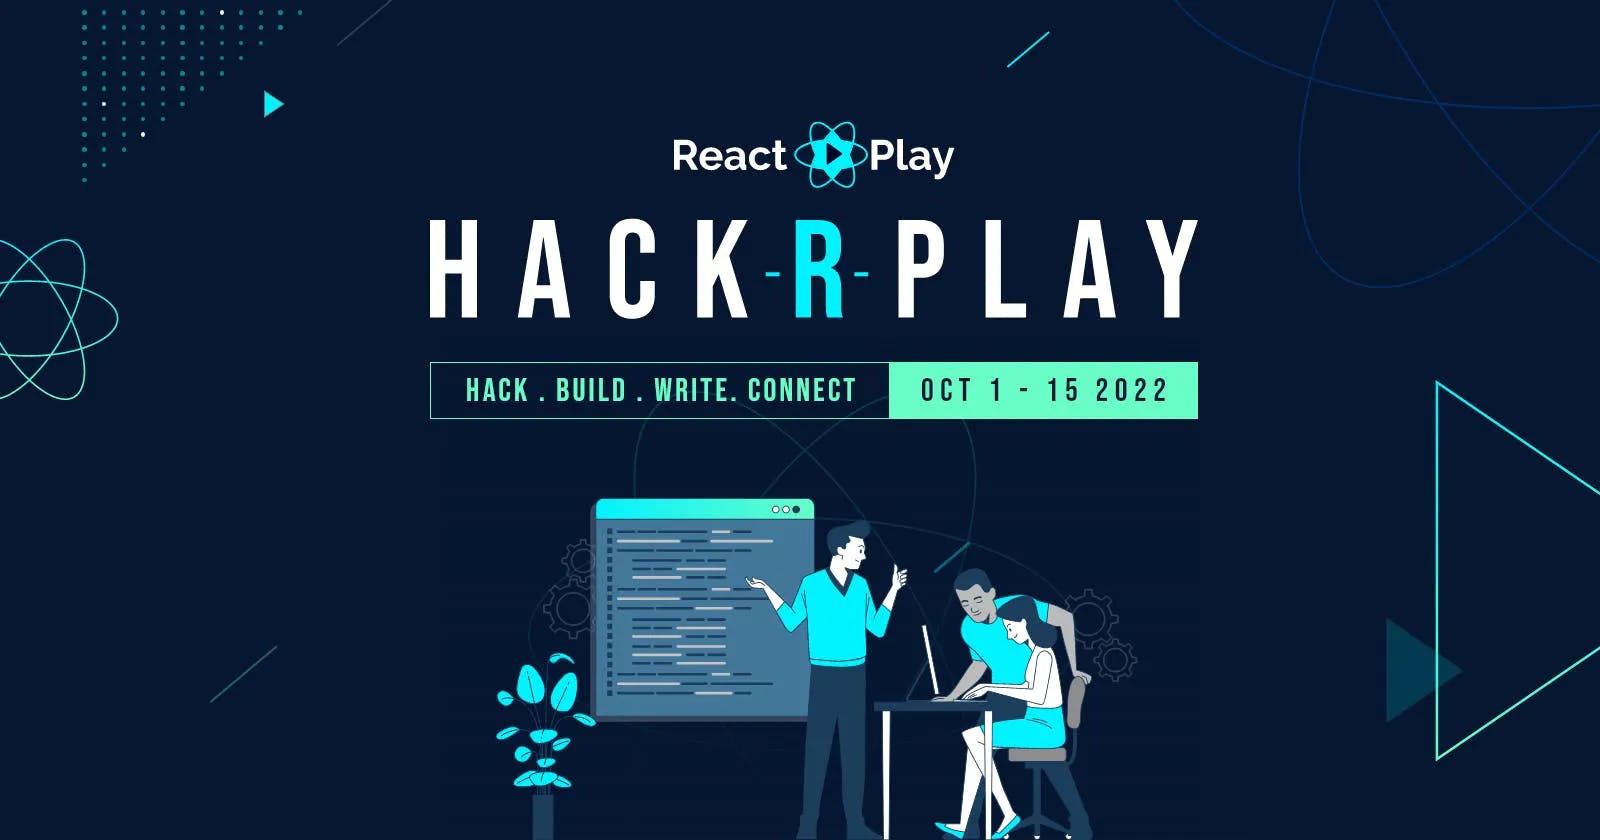 Hack-R-Play.png